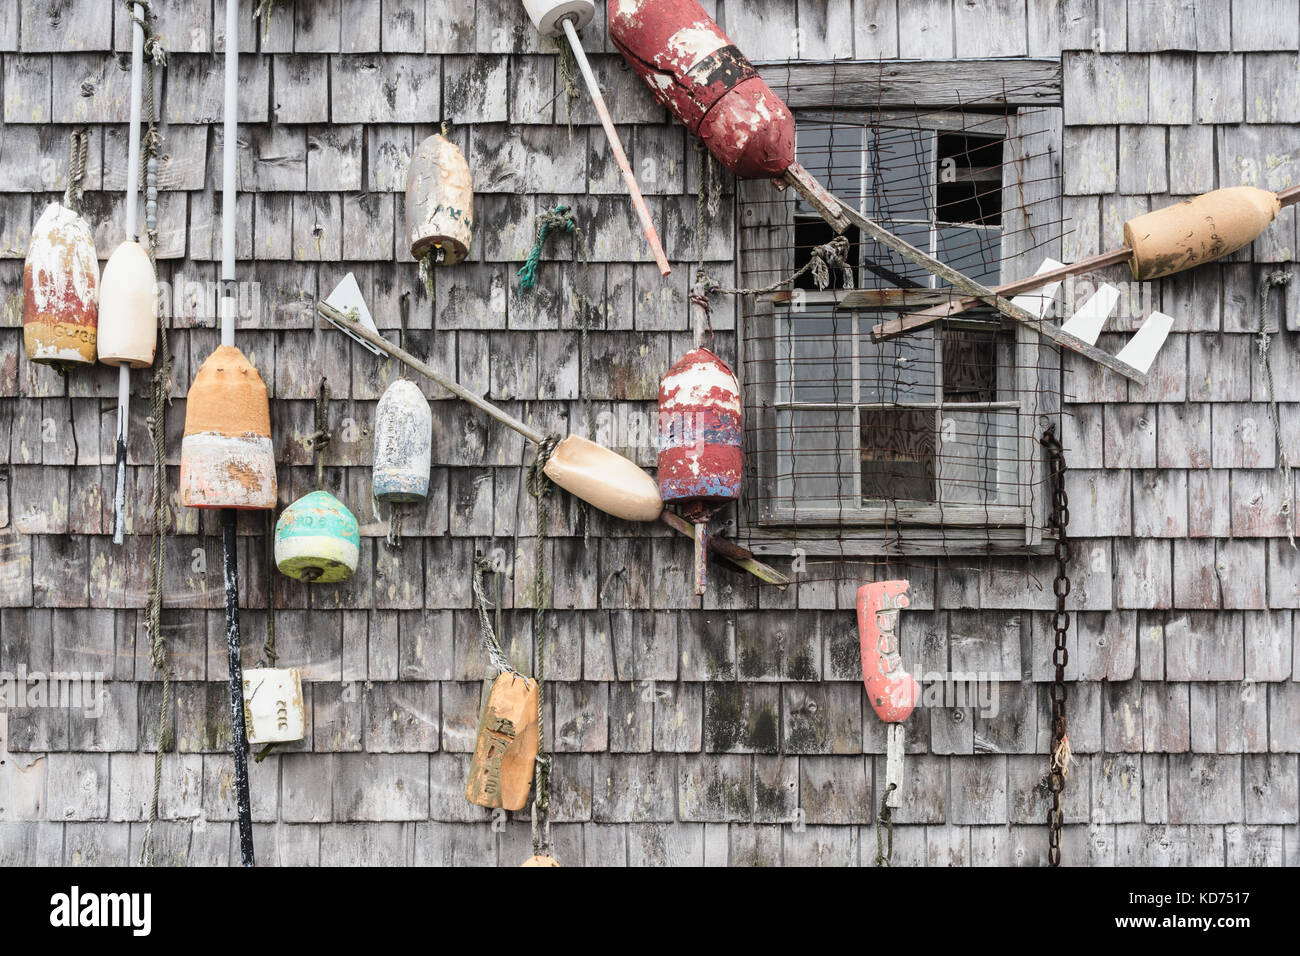 Cape neddick libra de langosta, York, Maine Foto de stock